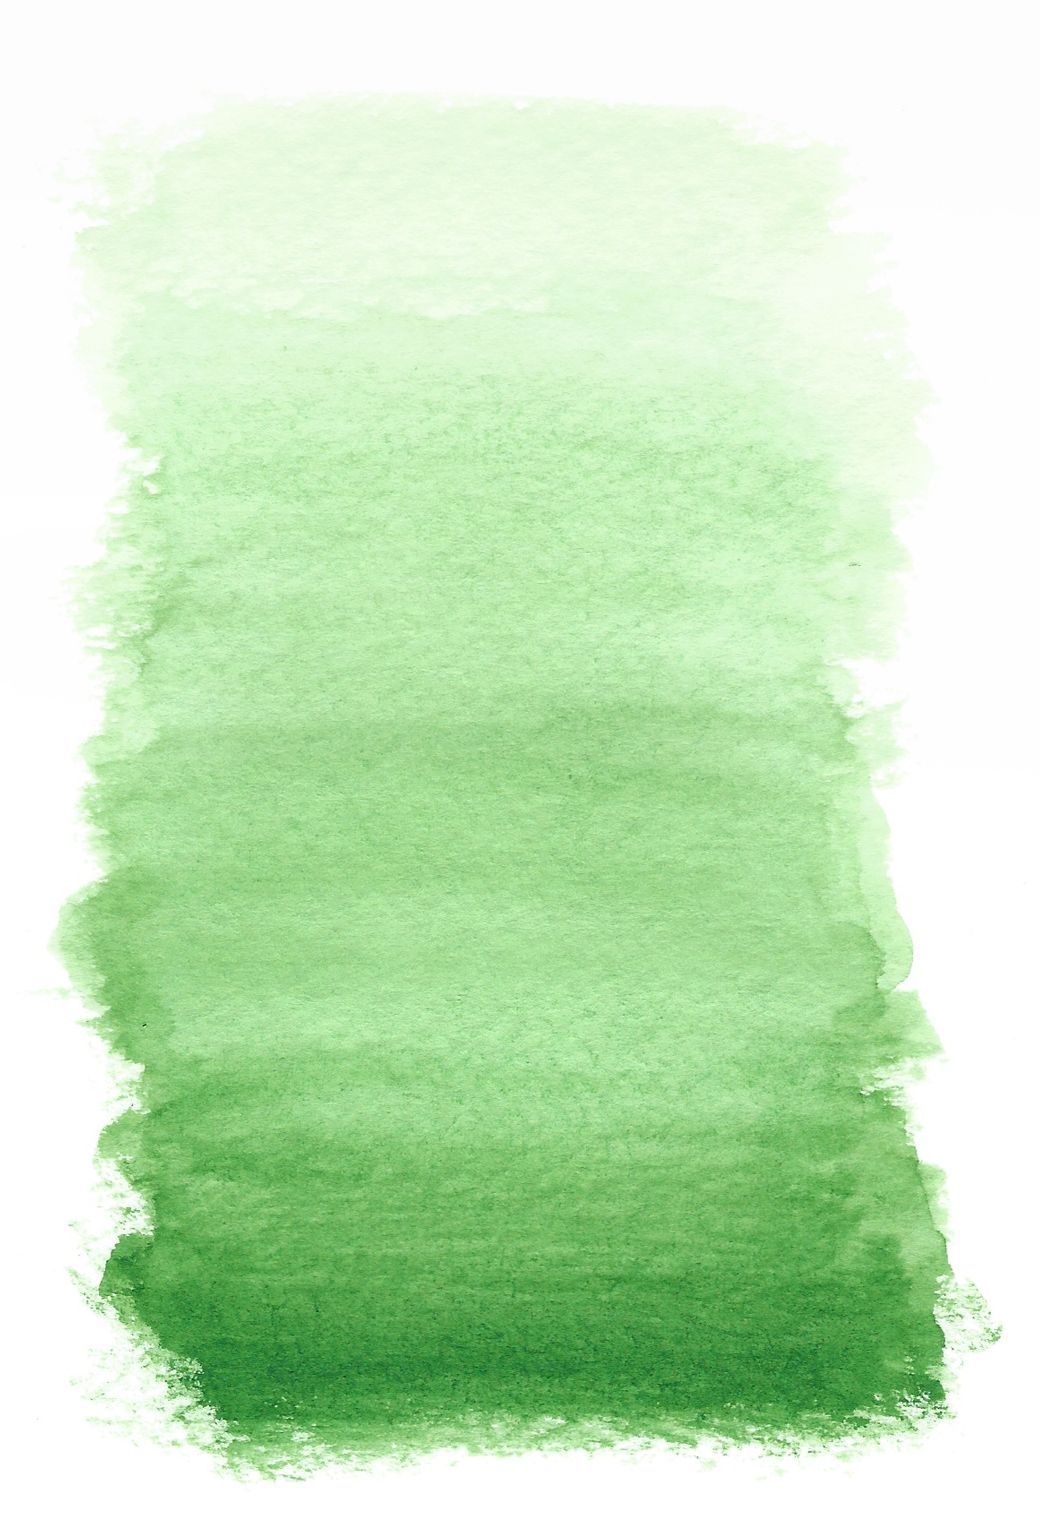 Green Watercolor iPhone Wallpaper. Green watercolor, Watercolor iphone, Watercolor background